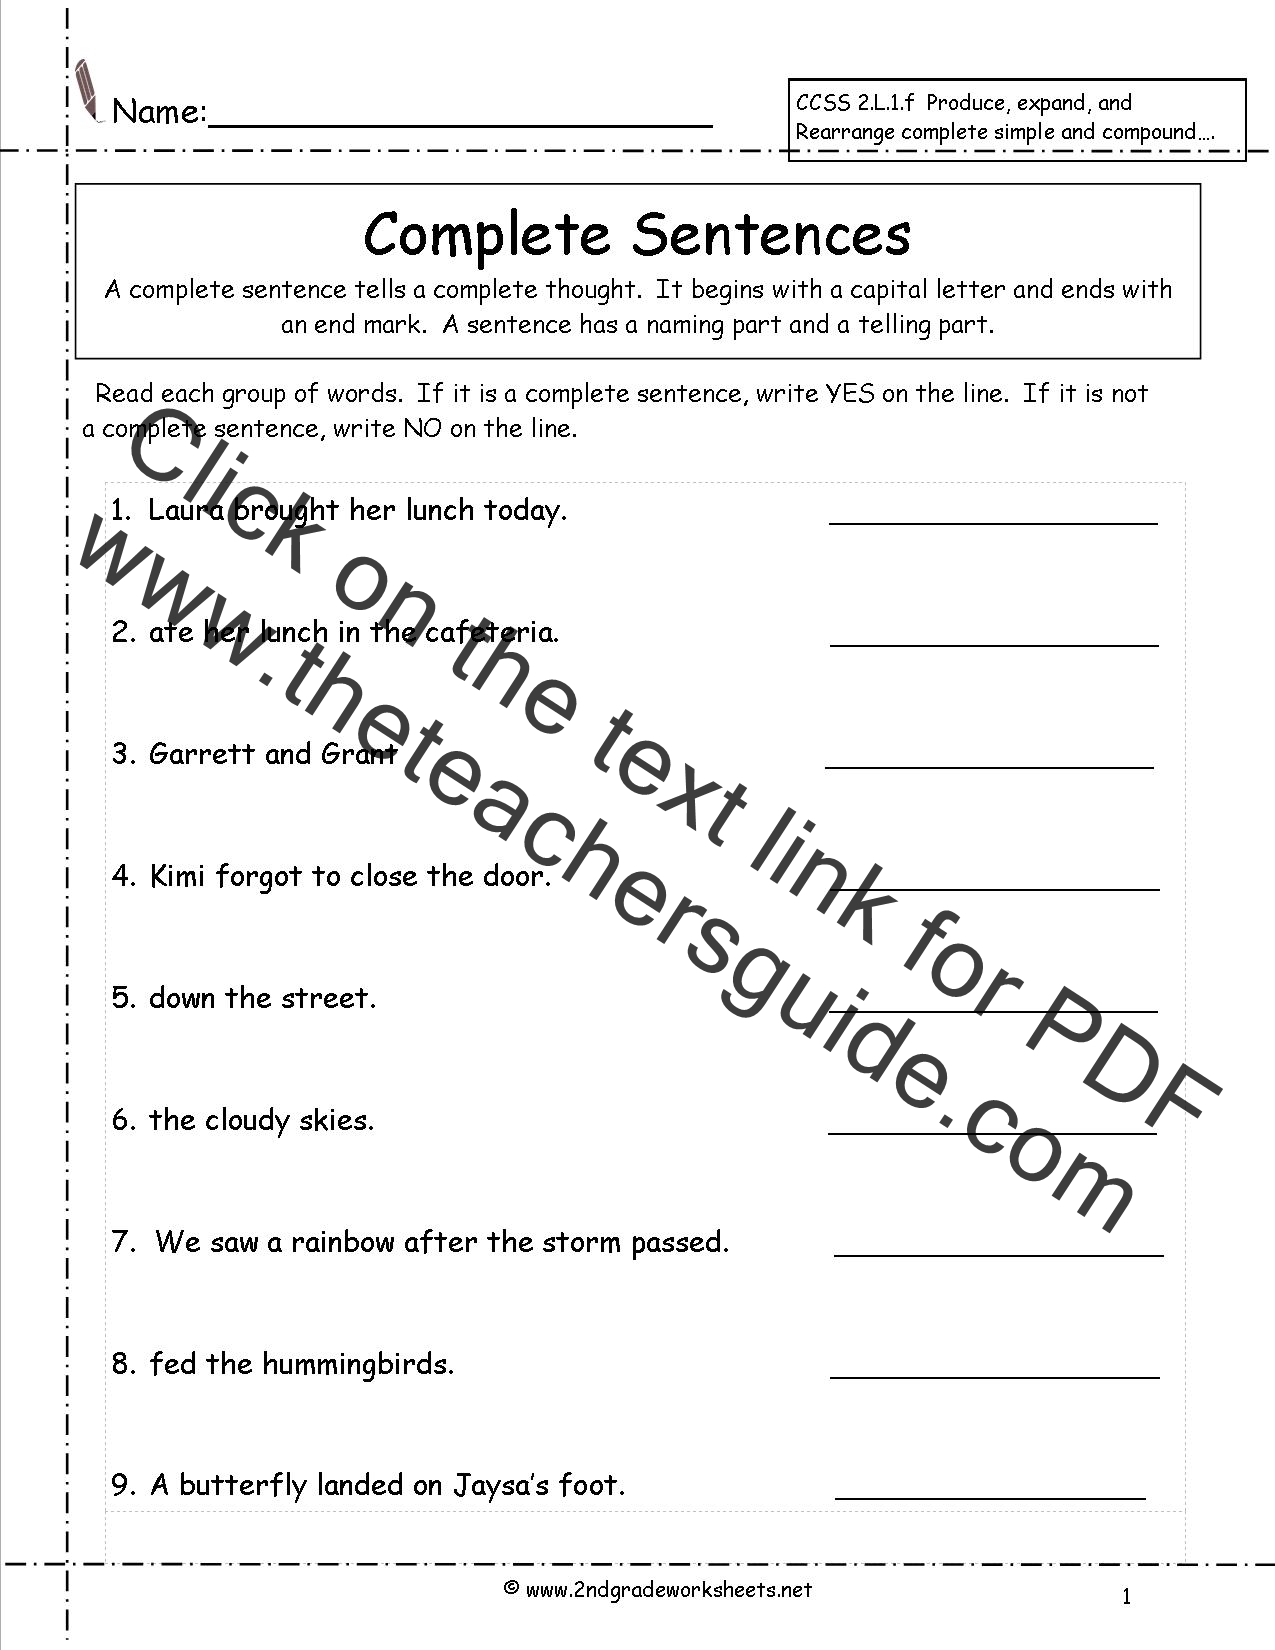 Pin Second Grade Sentence Correction Worksheets On Pinterest